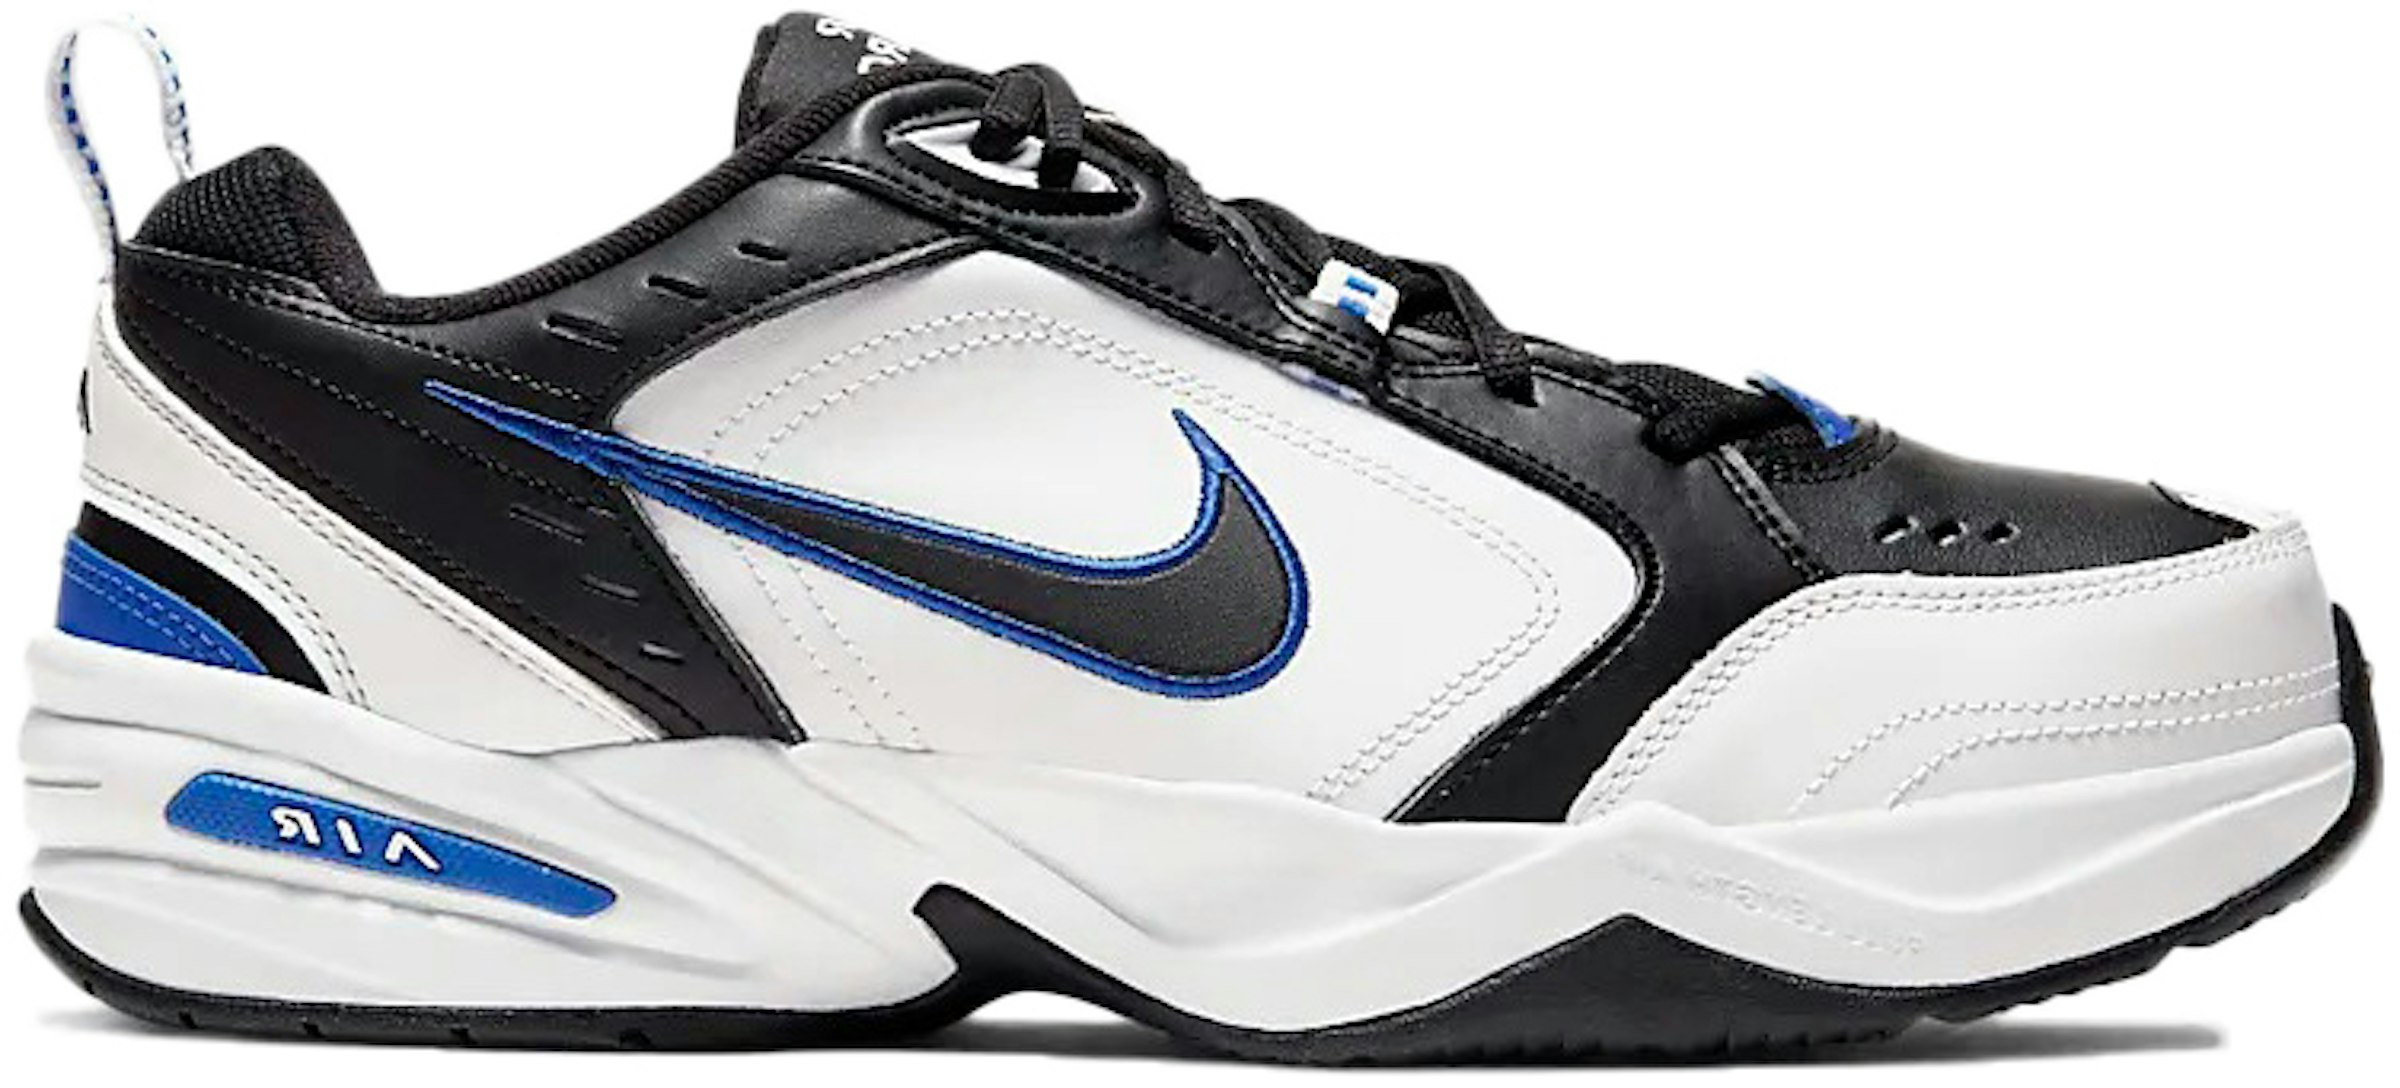 Nike Monarch IV Black White Blue - 415445-002 - MX